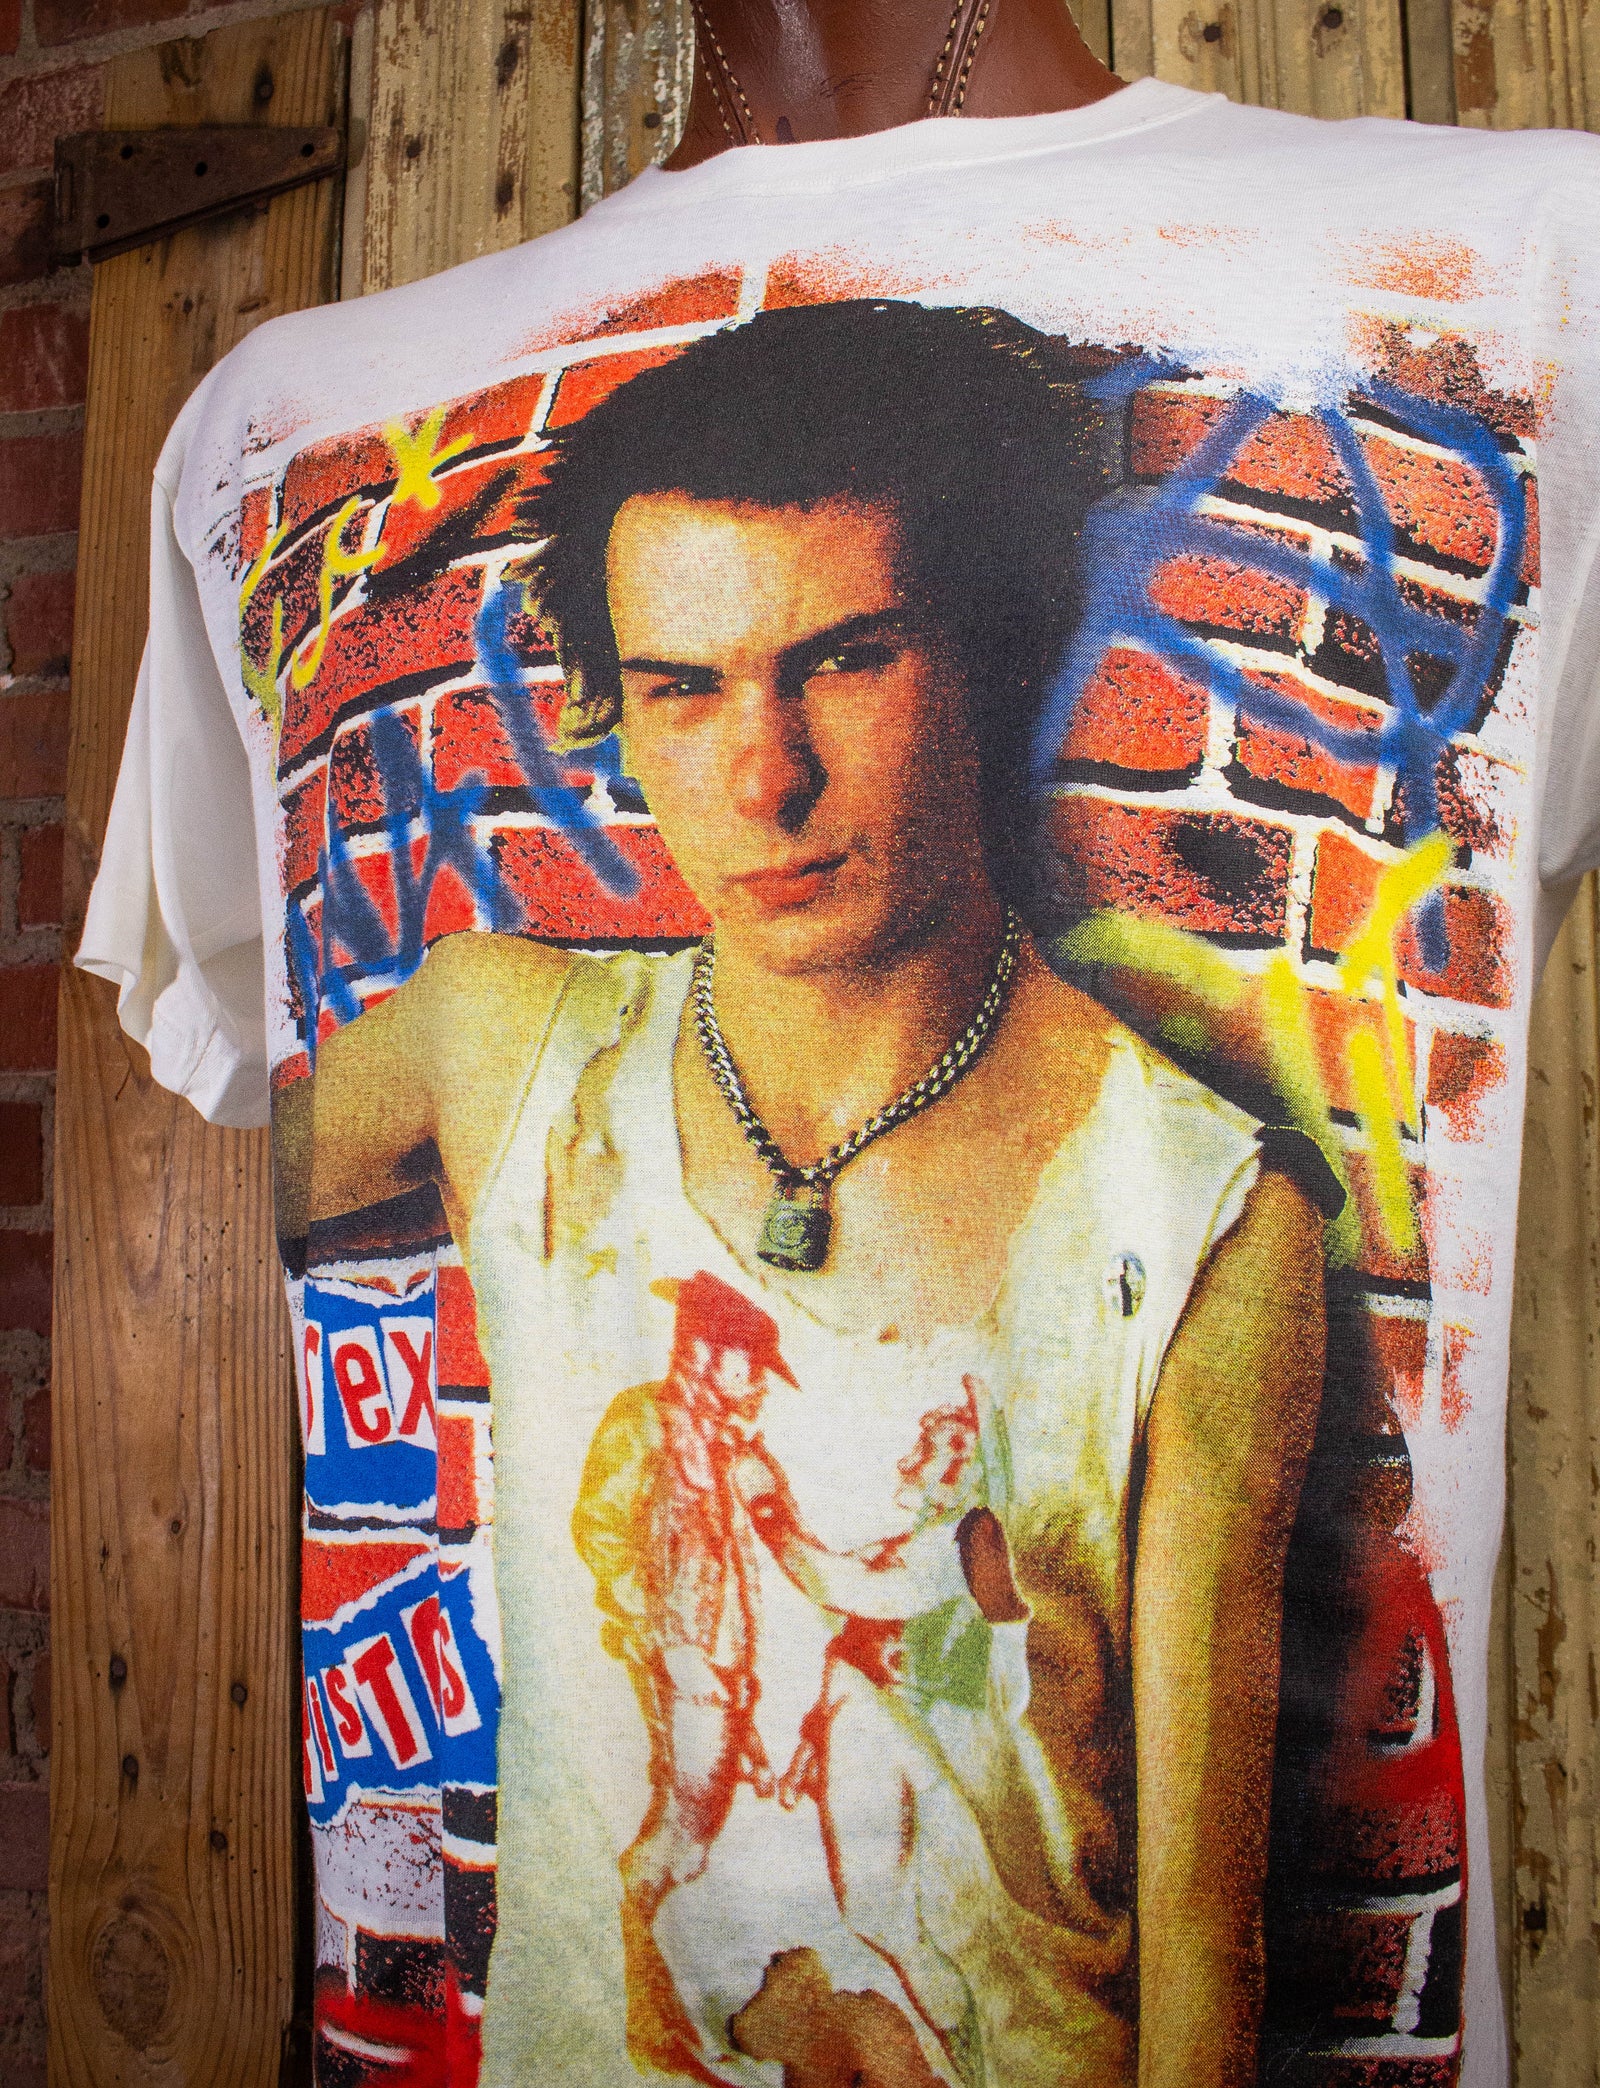 Vintage Sex Pistols Sid Vicious Tribute T Shirt 80s White XL